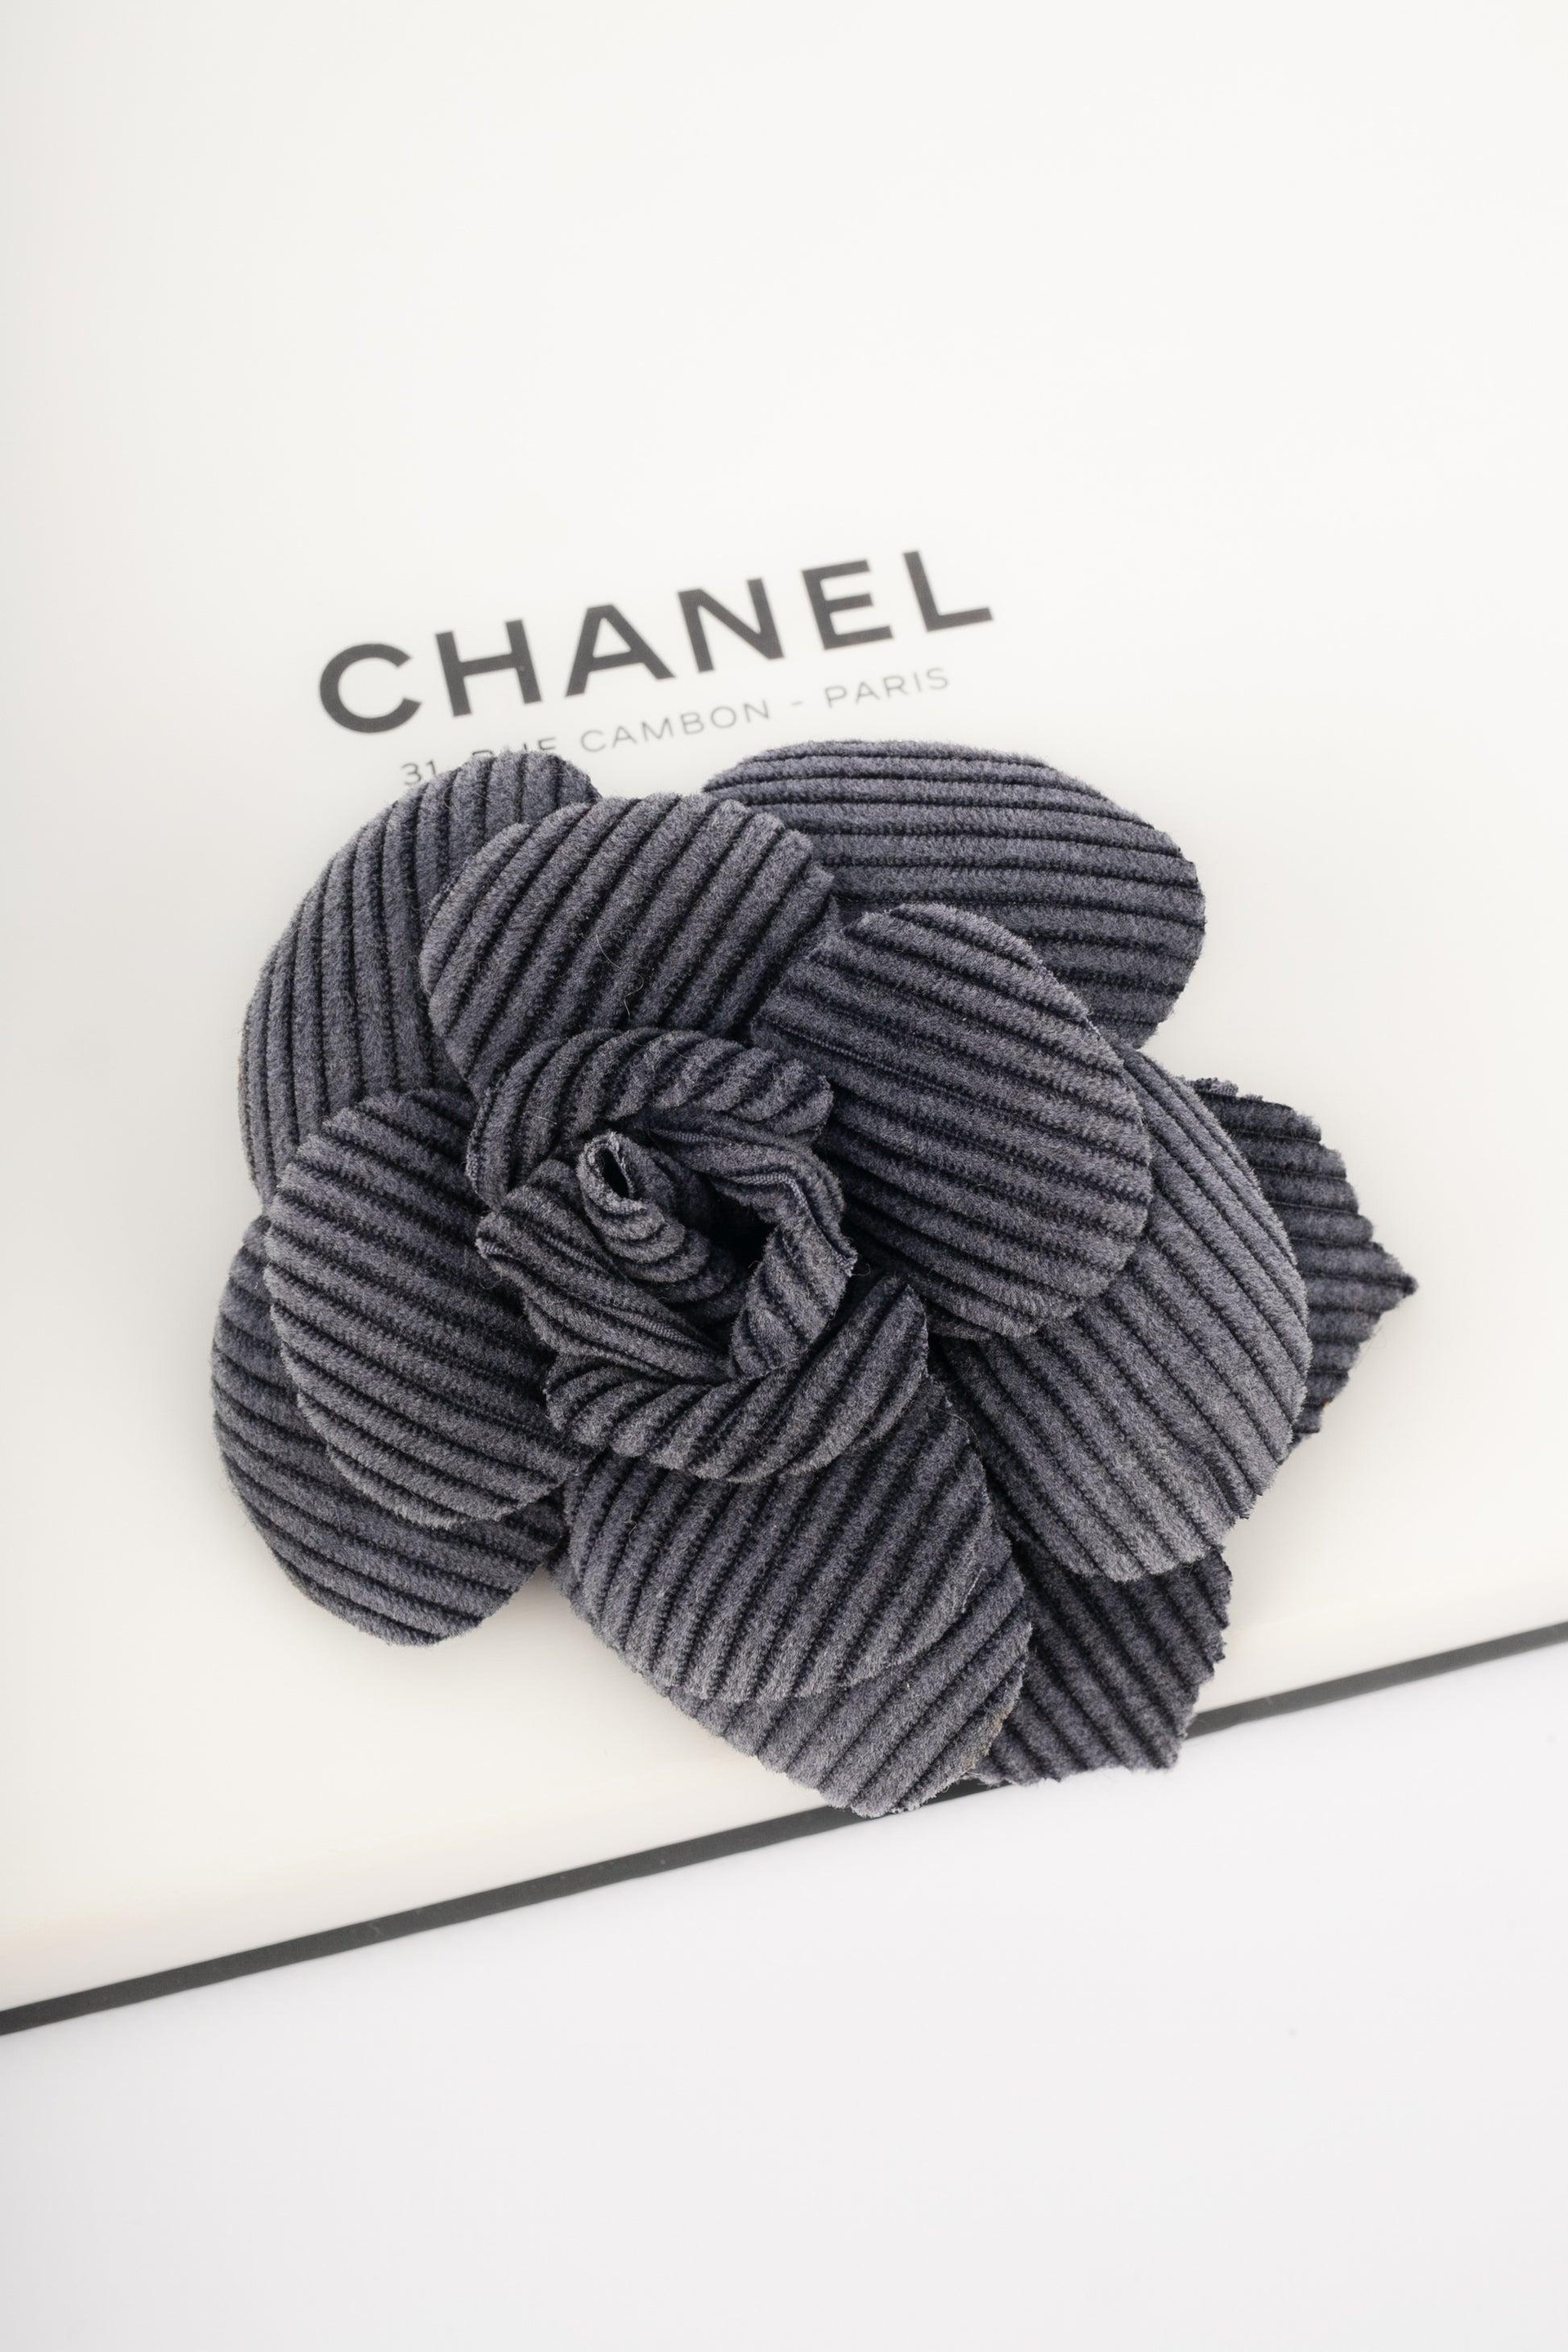 Chanel Grey Corduroy Velvet Camellia Brooch For Sale 1